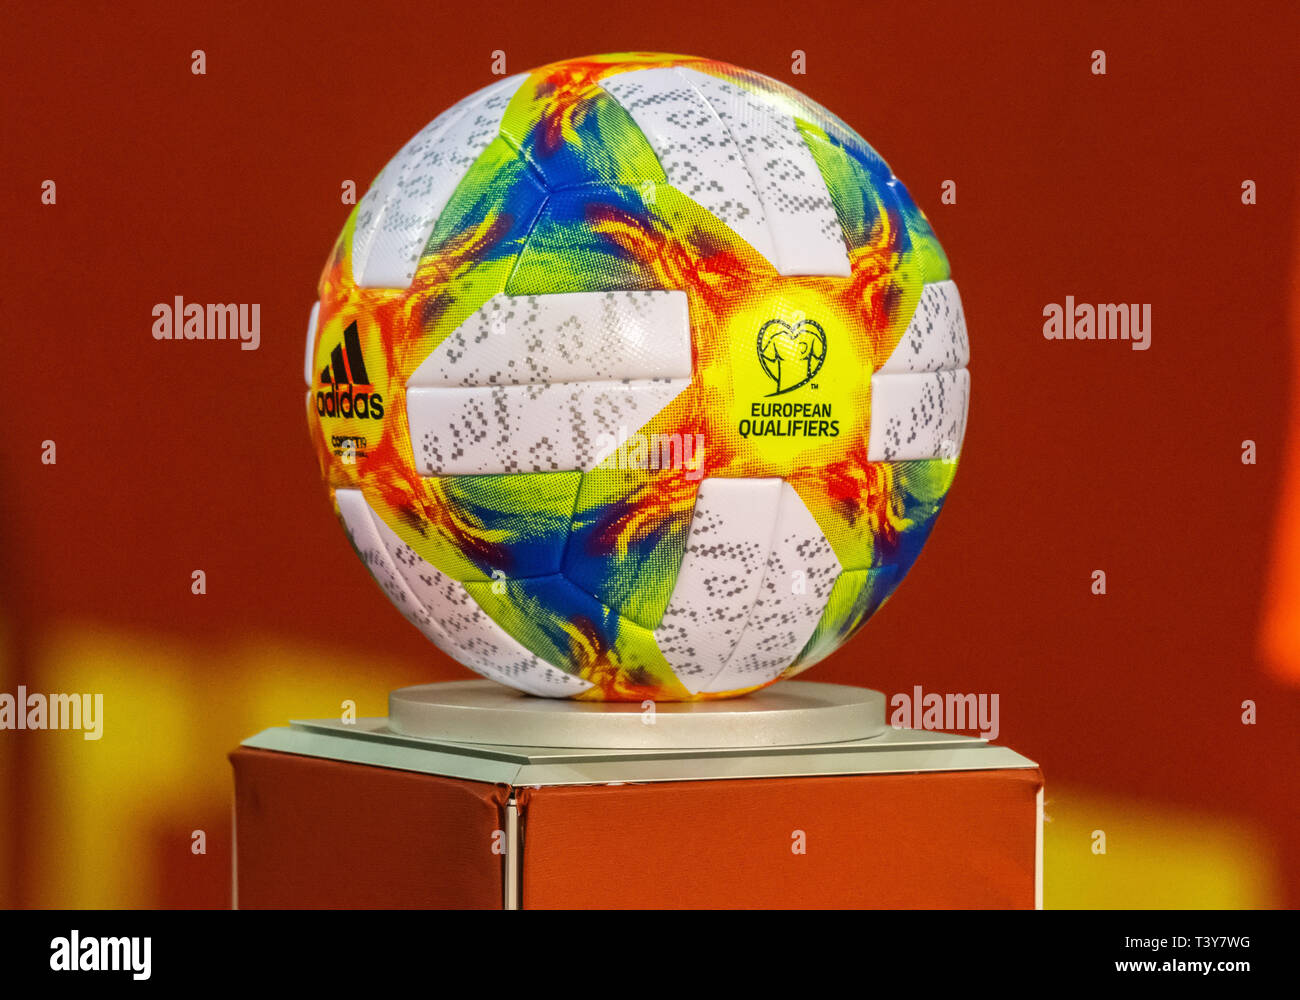 uefa euro 2020 official ball